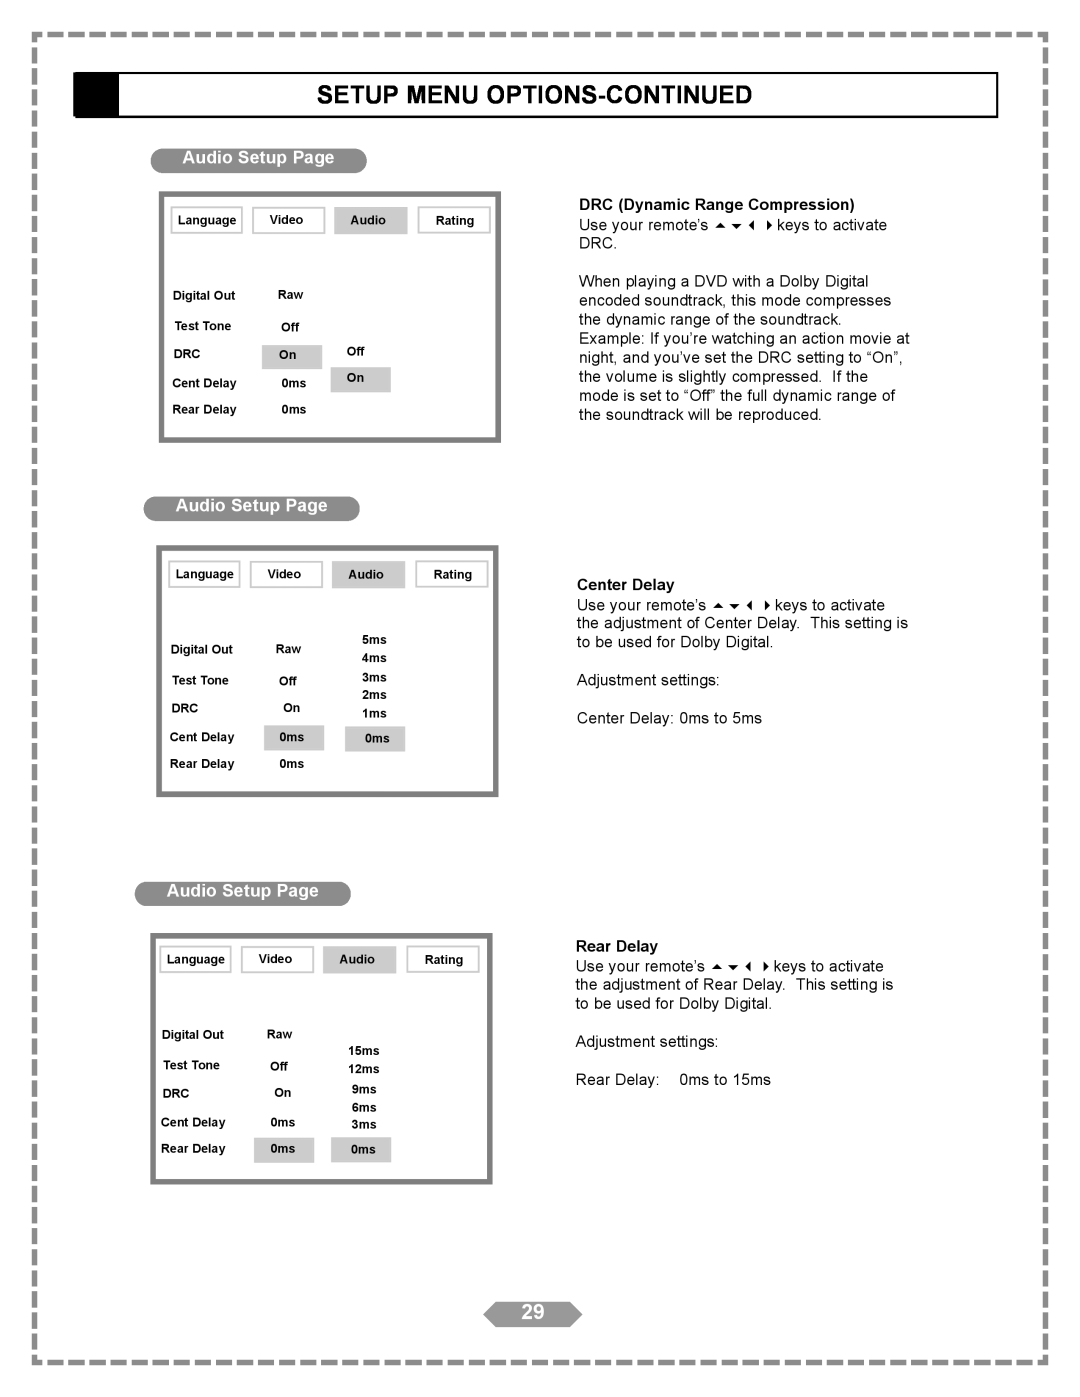 Apex Digital HT-175 manual Setup Menu Options-Continued, More Audio Settings Audio Setup Page, General Setup Page 